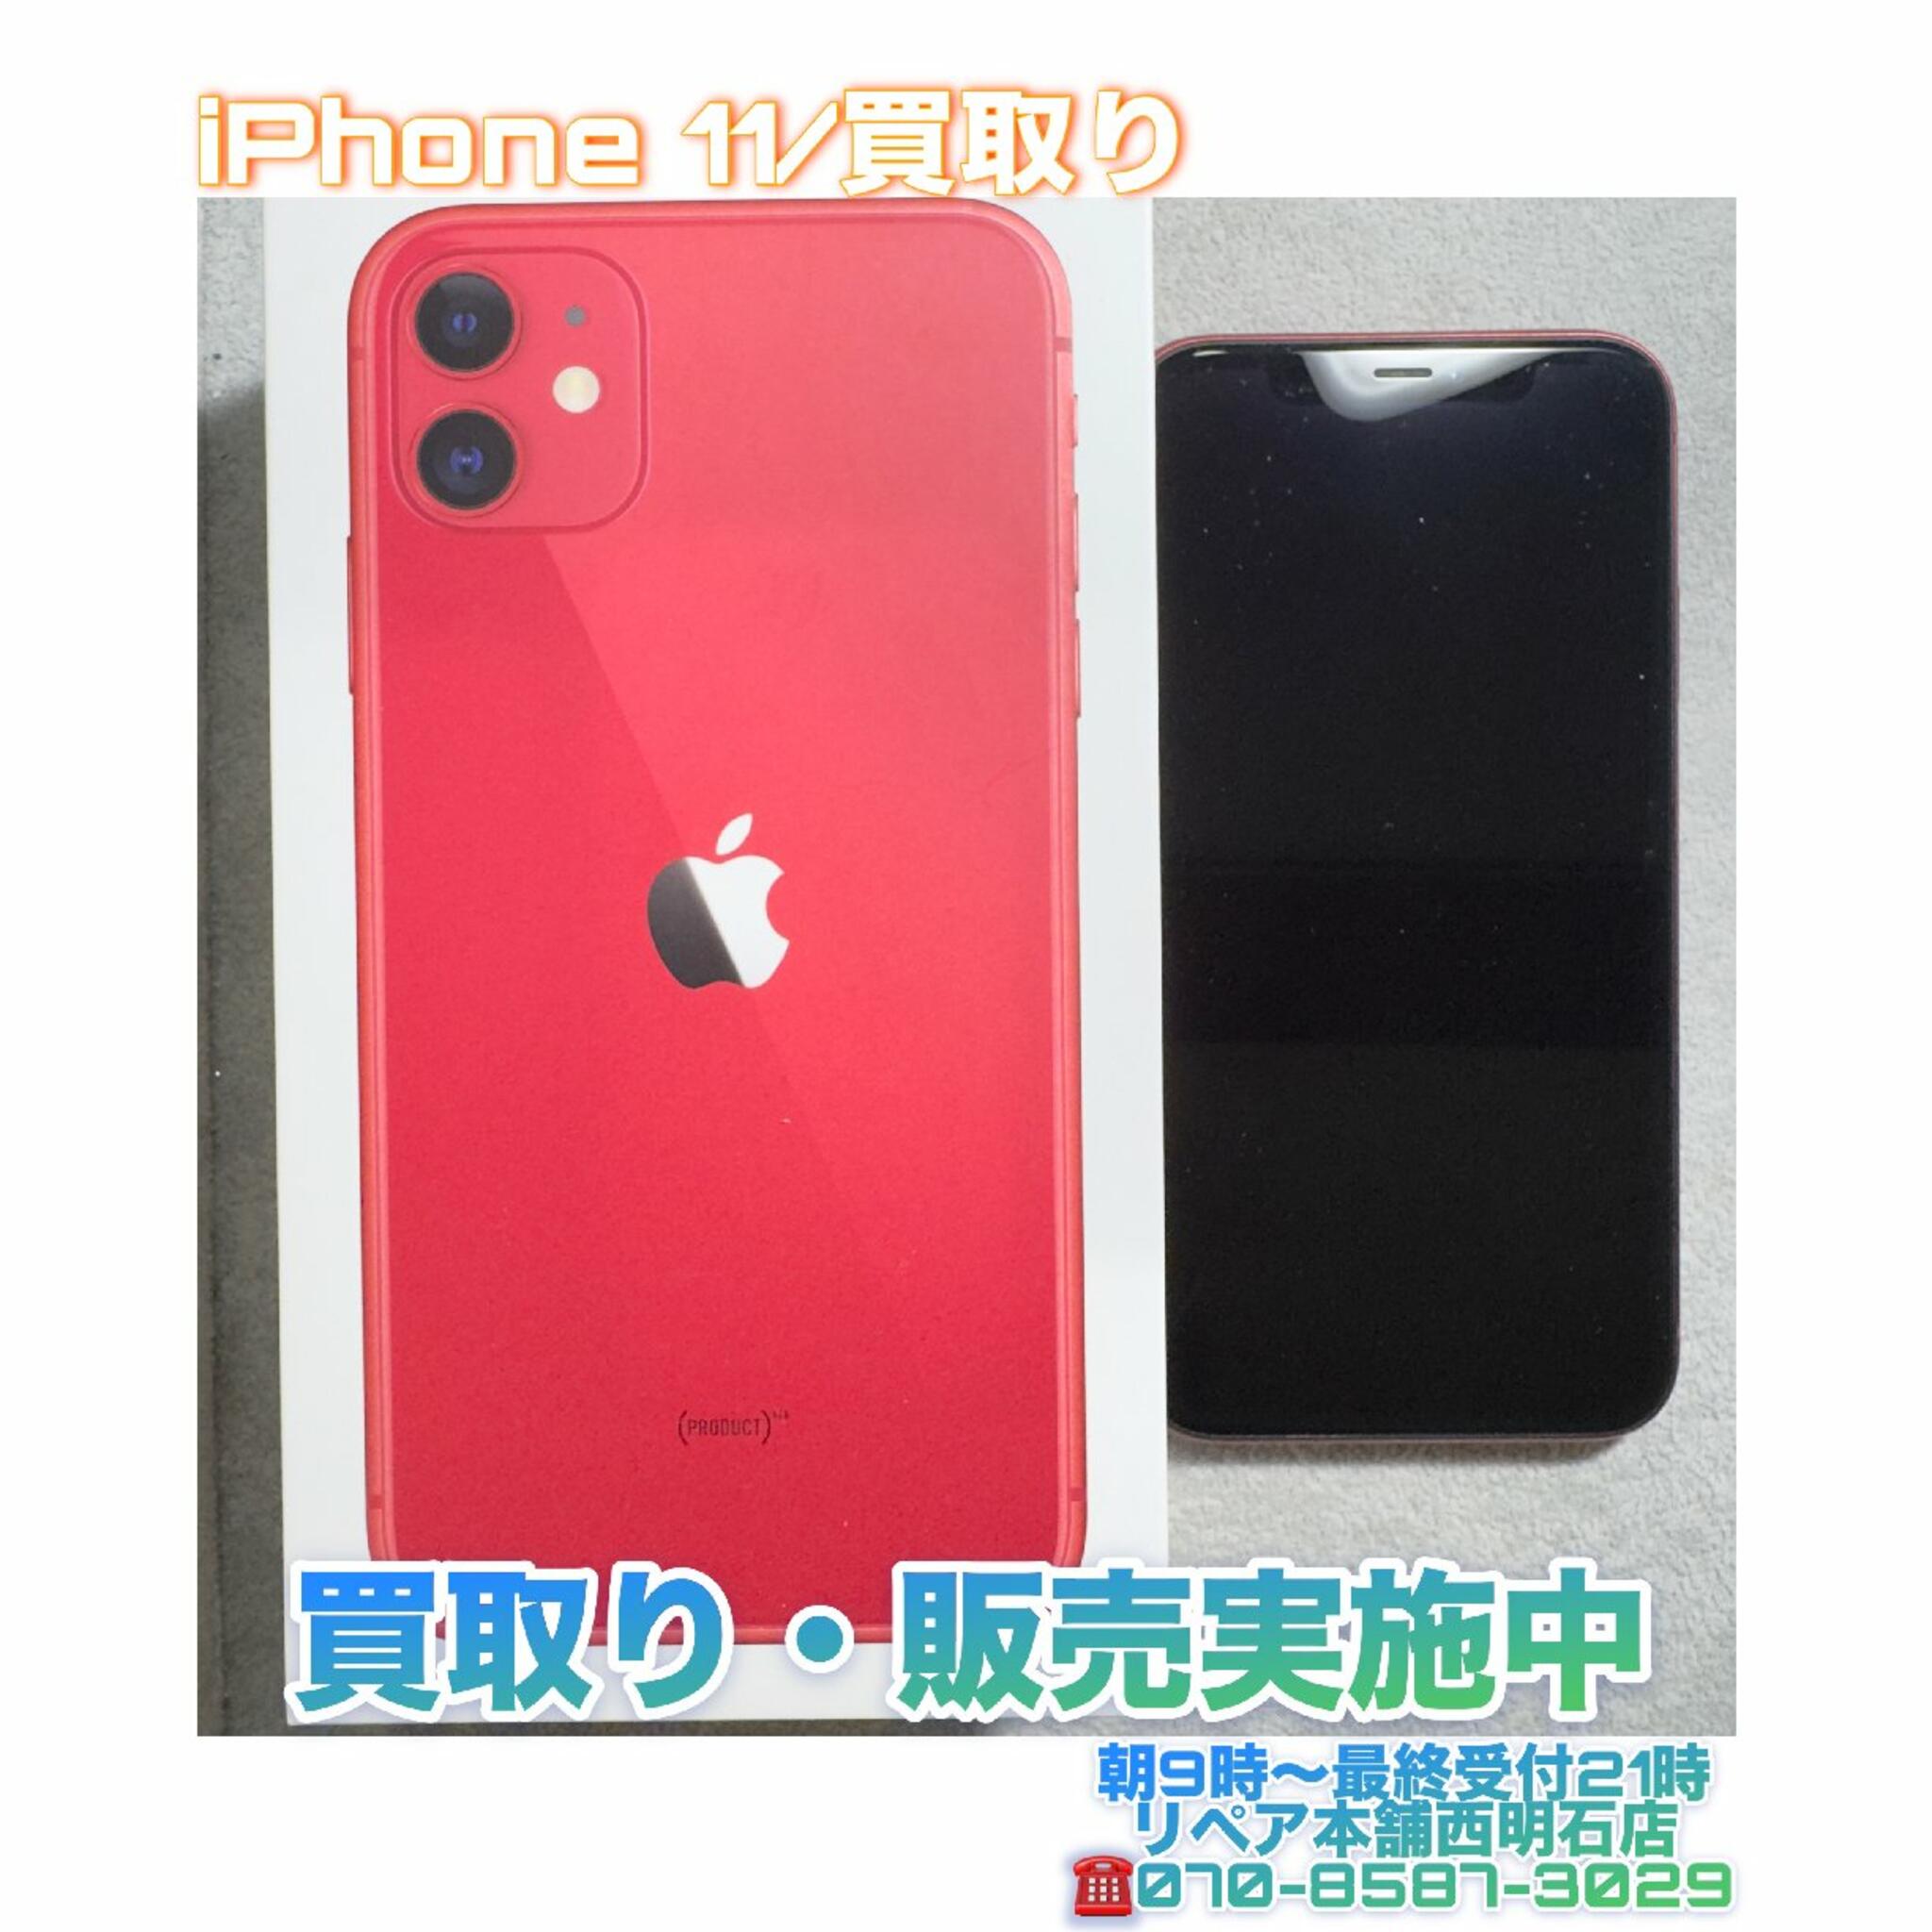 iPhone修理 明石 リペア本舗 西明石店からのお知らせ(💡加古川市の方より、iPhone 11買取りのご依頼を頂きました✨)に関する写真